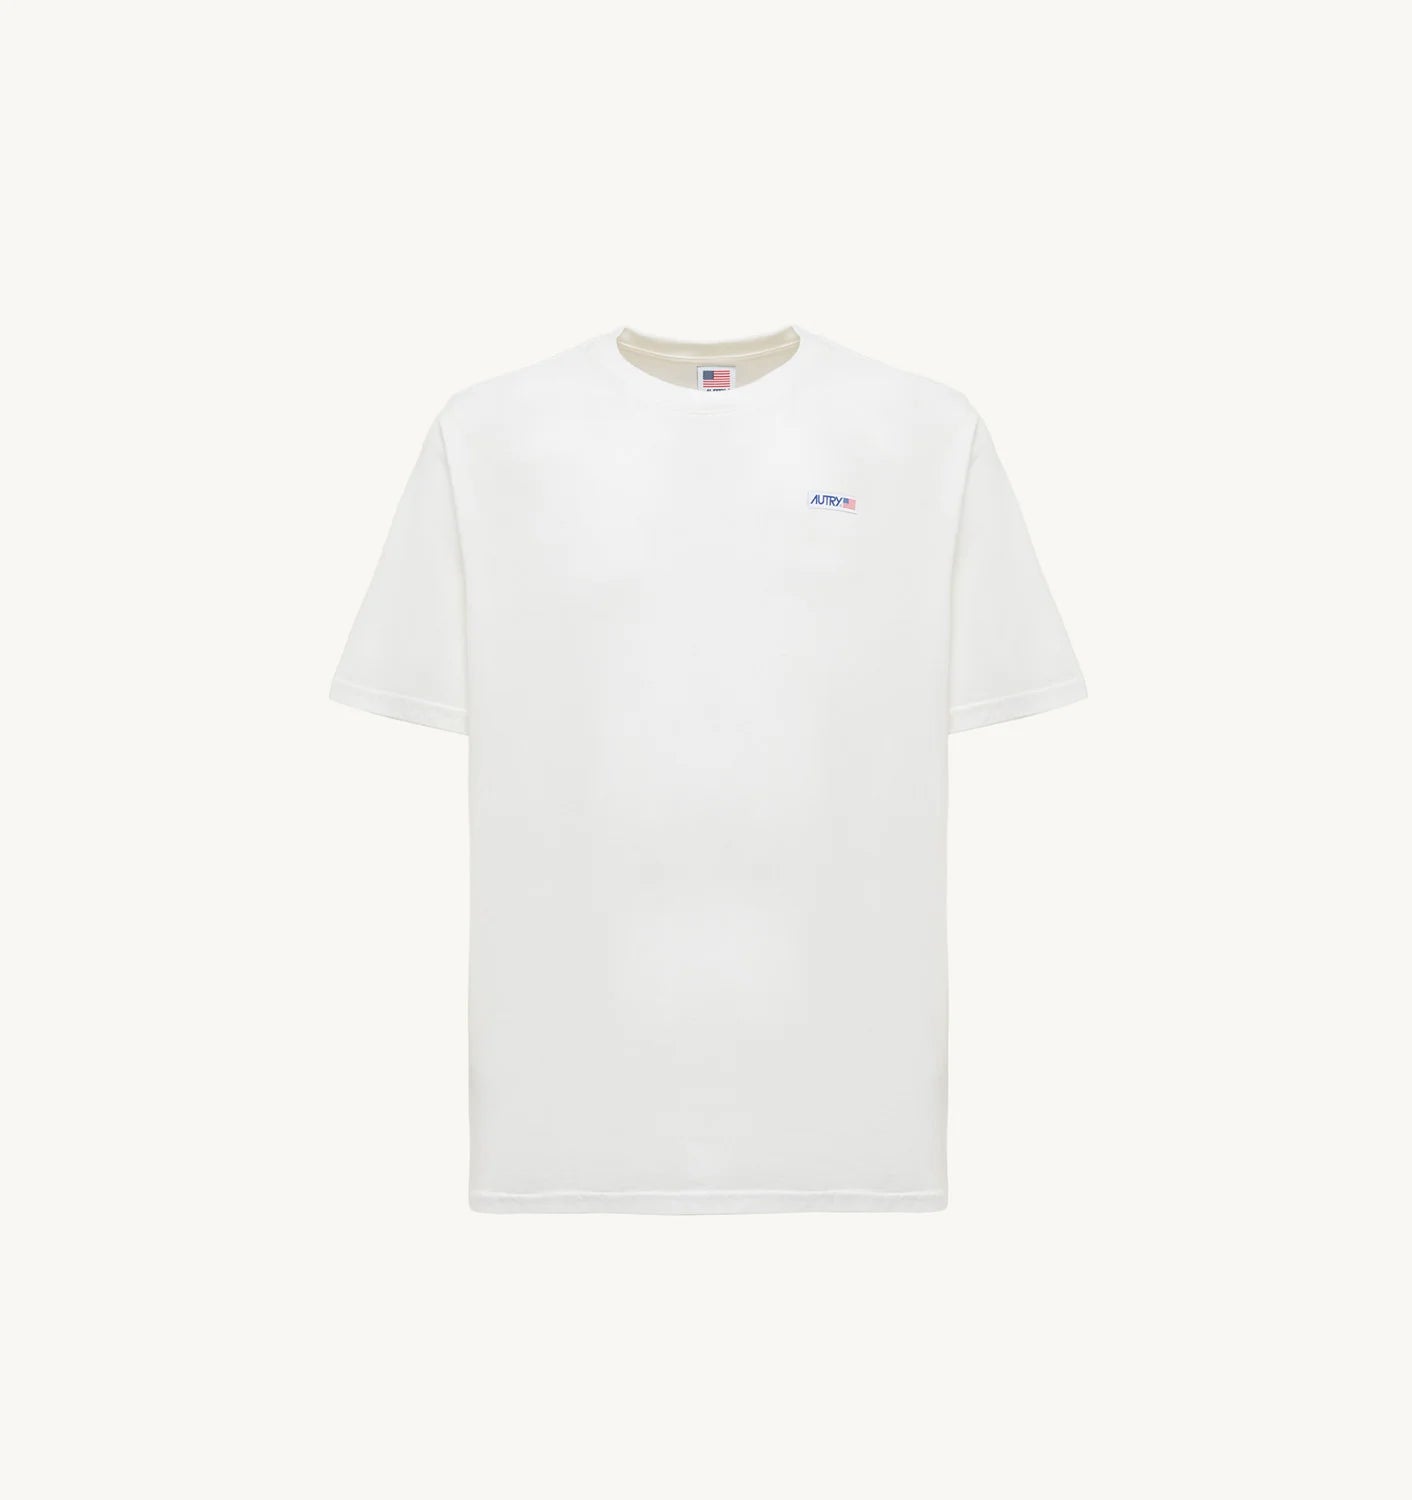 Autry Men's T-Shirt Icon TSIM-401W White